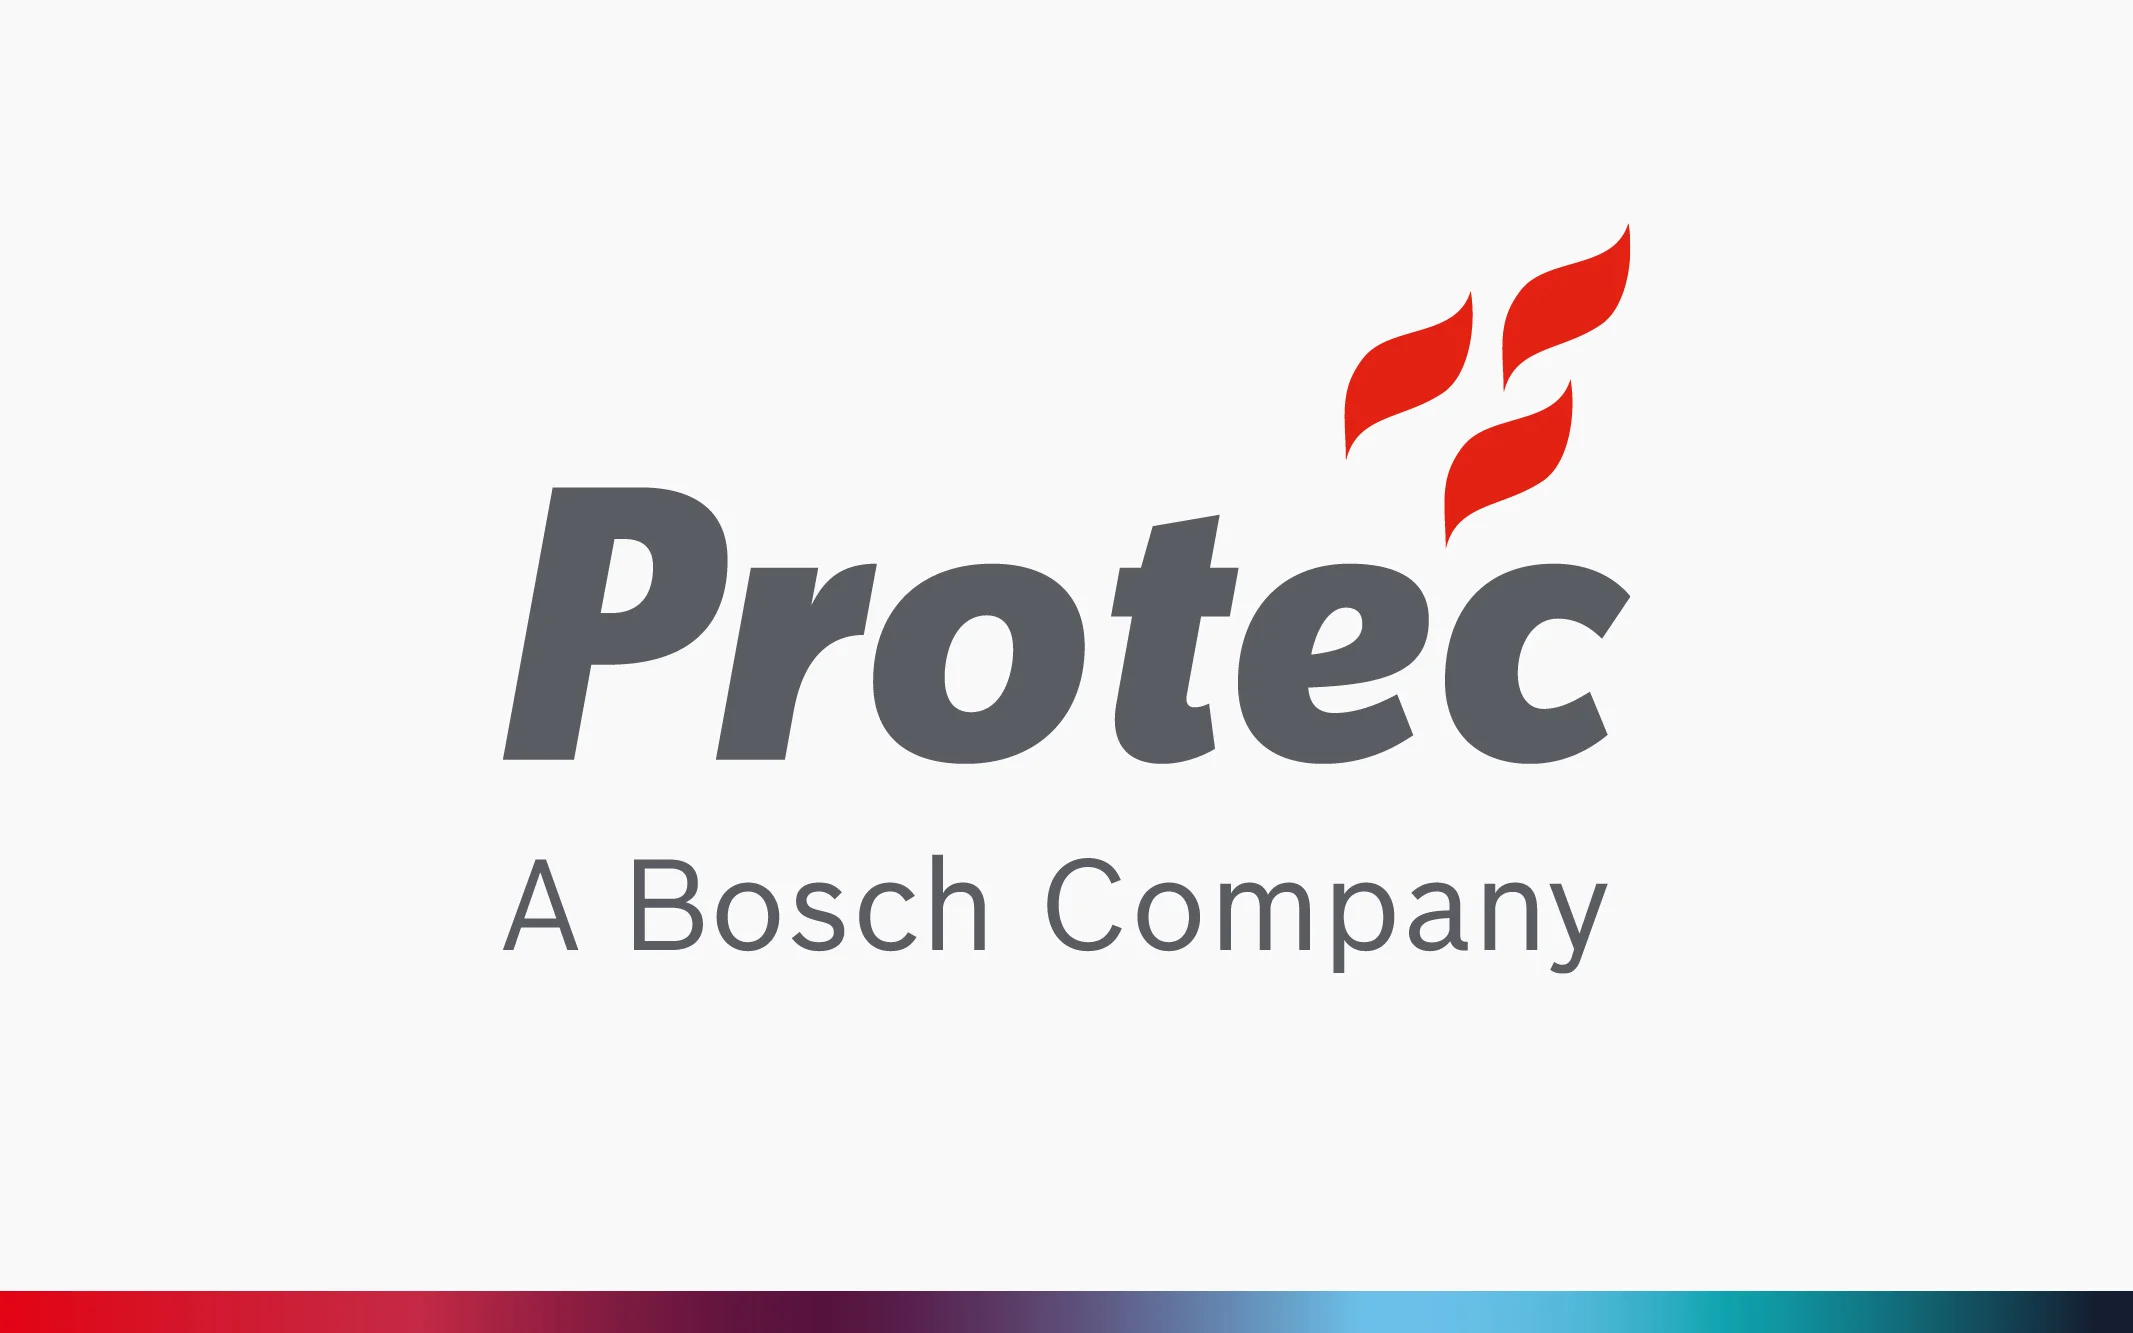 Protec A Bosch Company